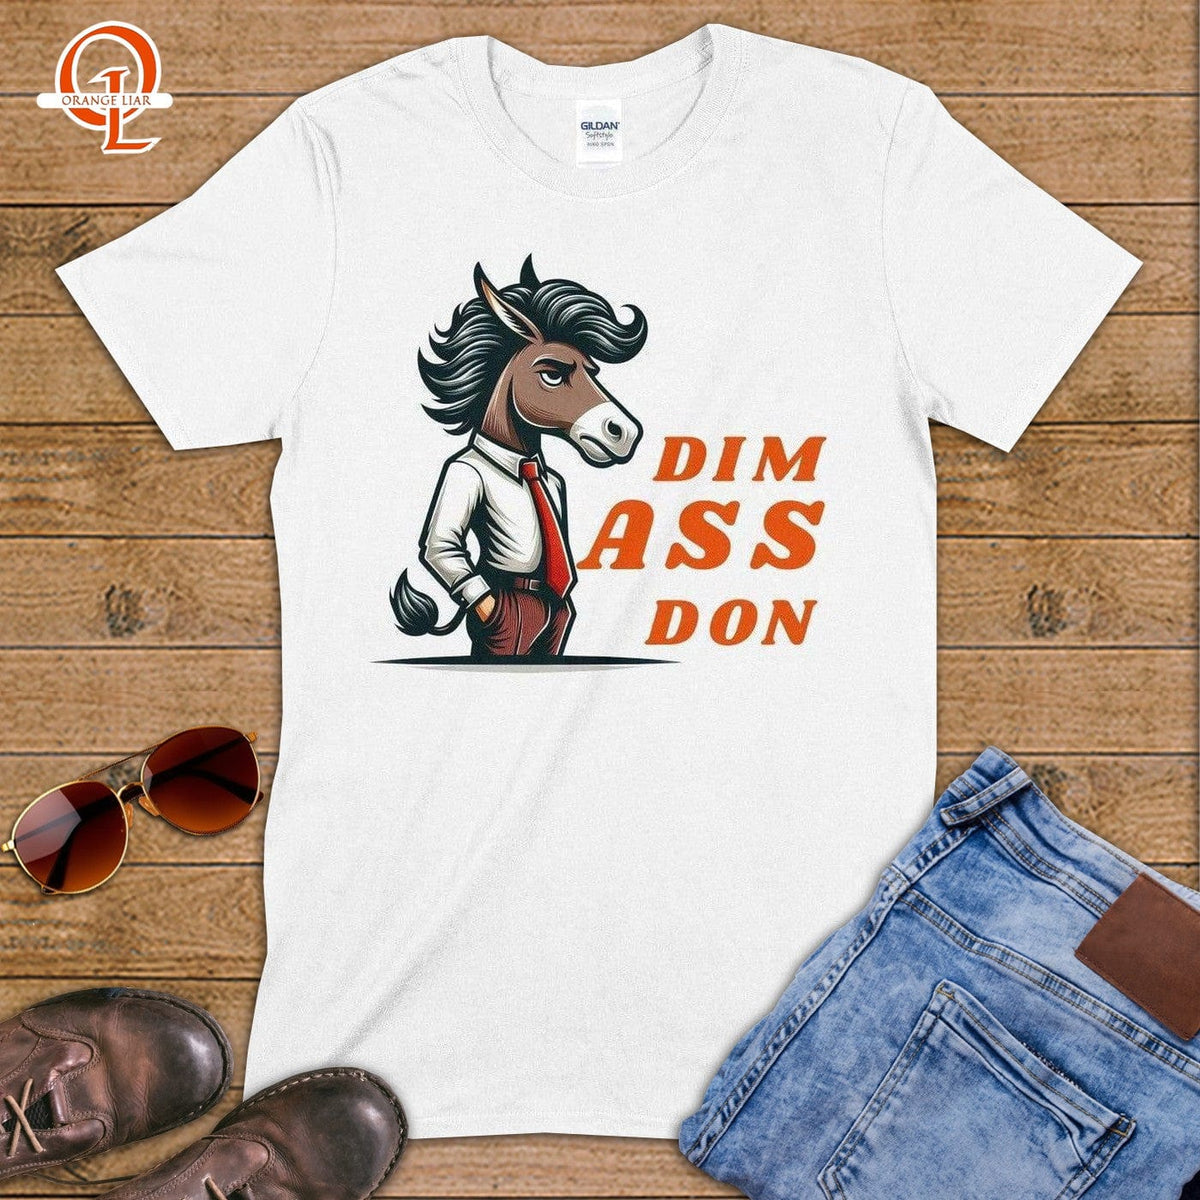 Dim Ass Don ~ T-Shirt-Orange Liar